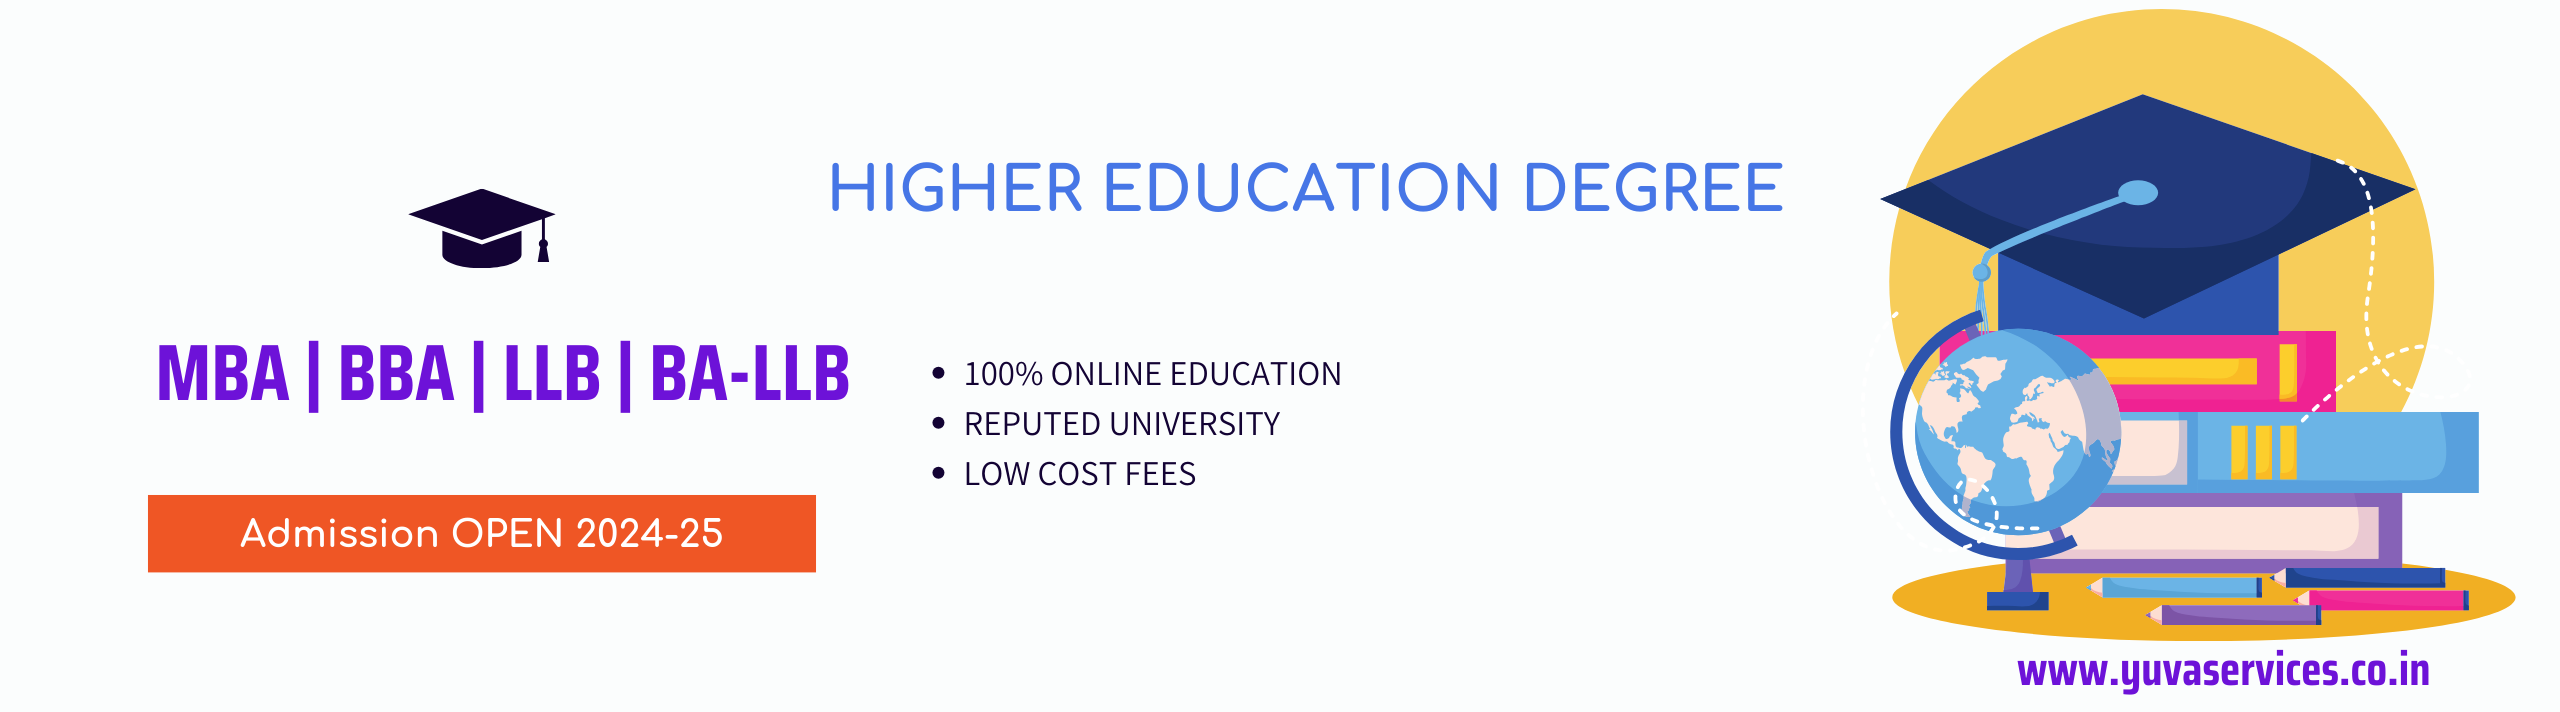 HIGHER EDUCATION DEGREE (1)